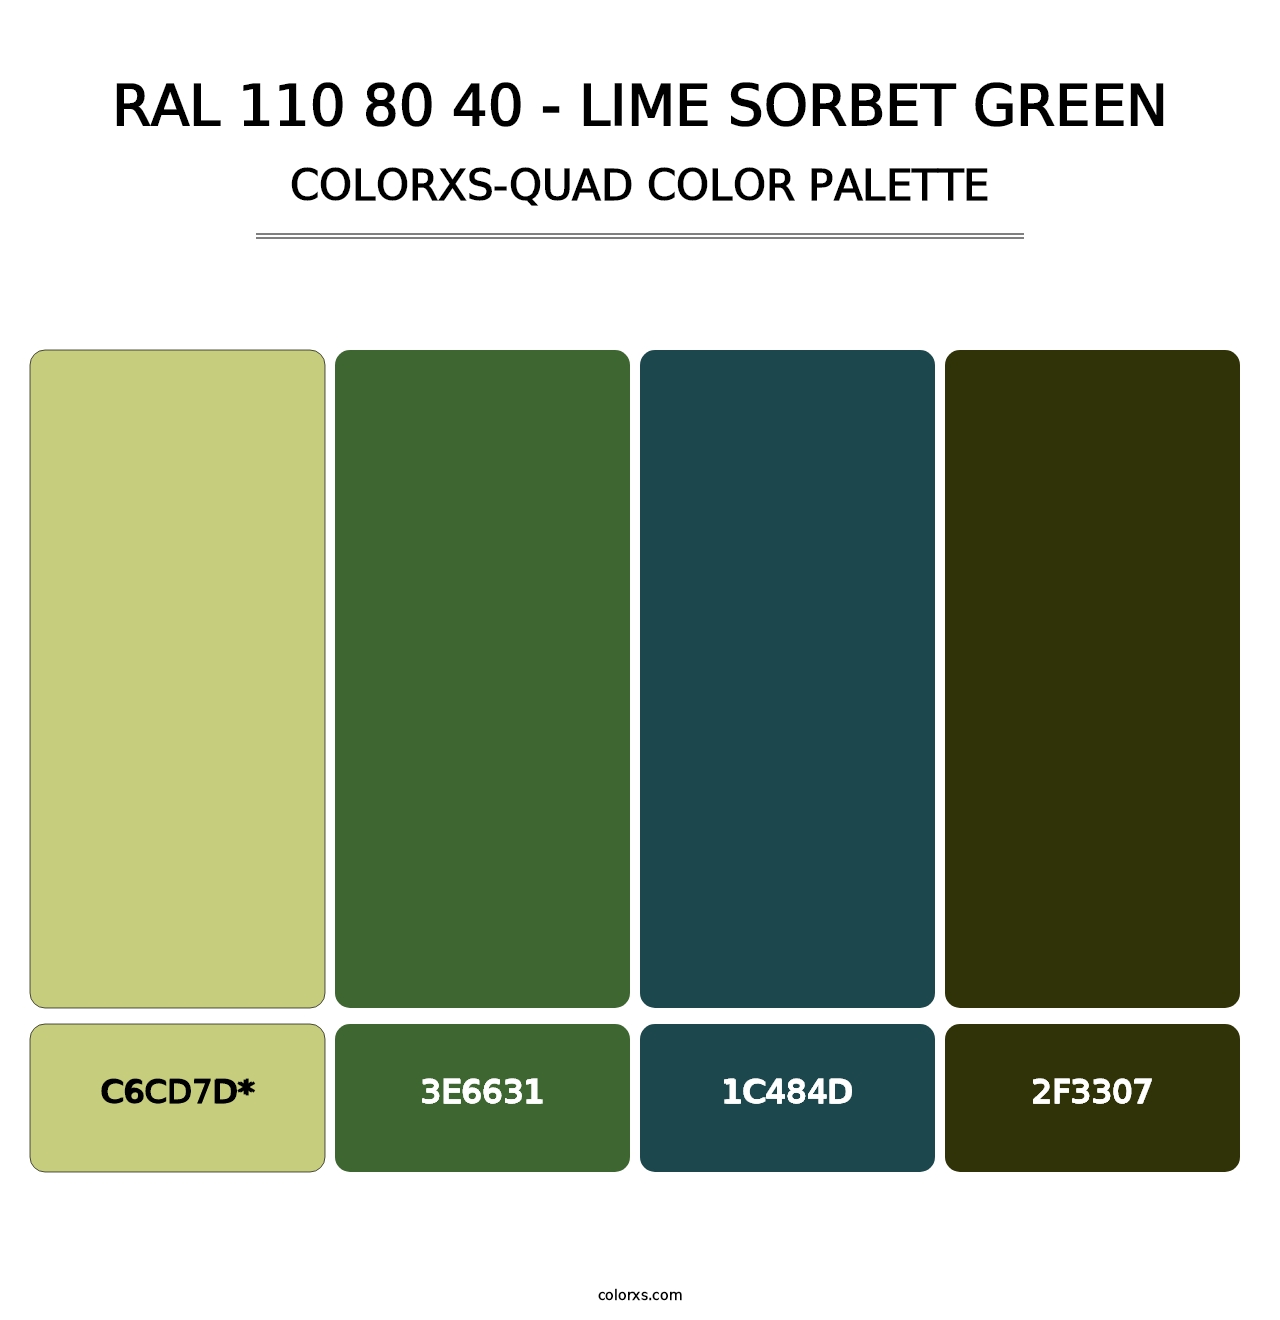 RAL 110 80 40 - Lime Sorbet Green - Colorxs Quad Palette